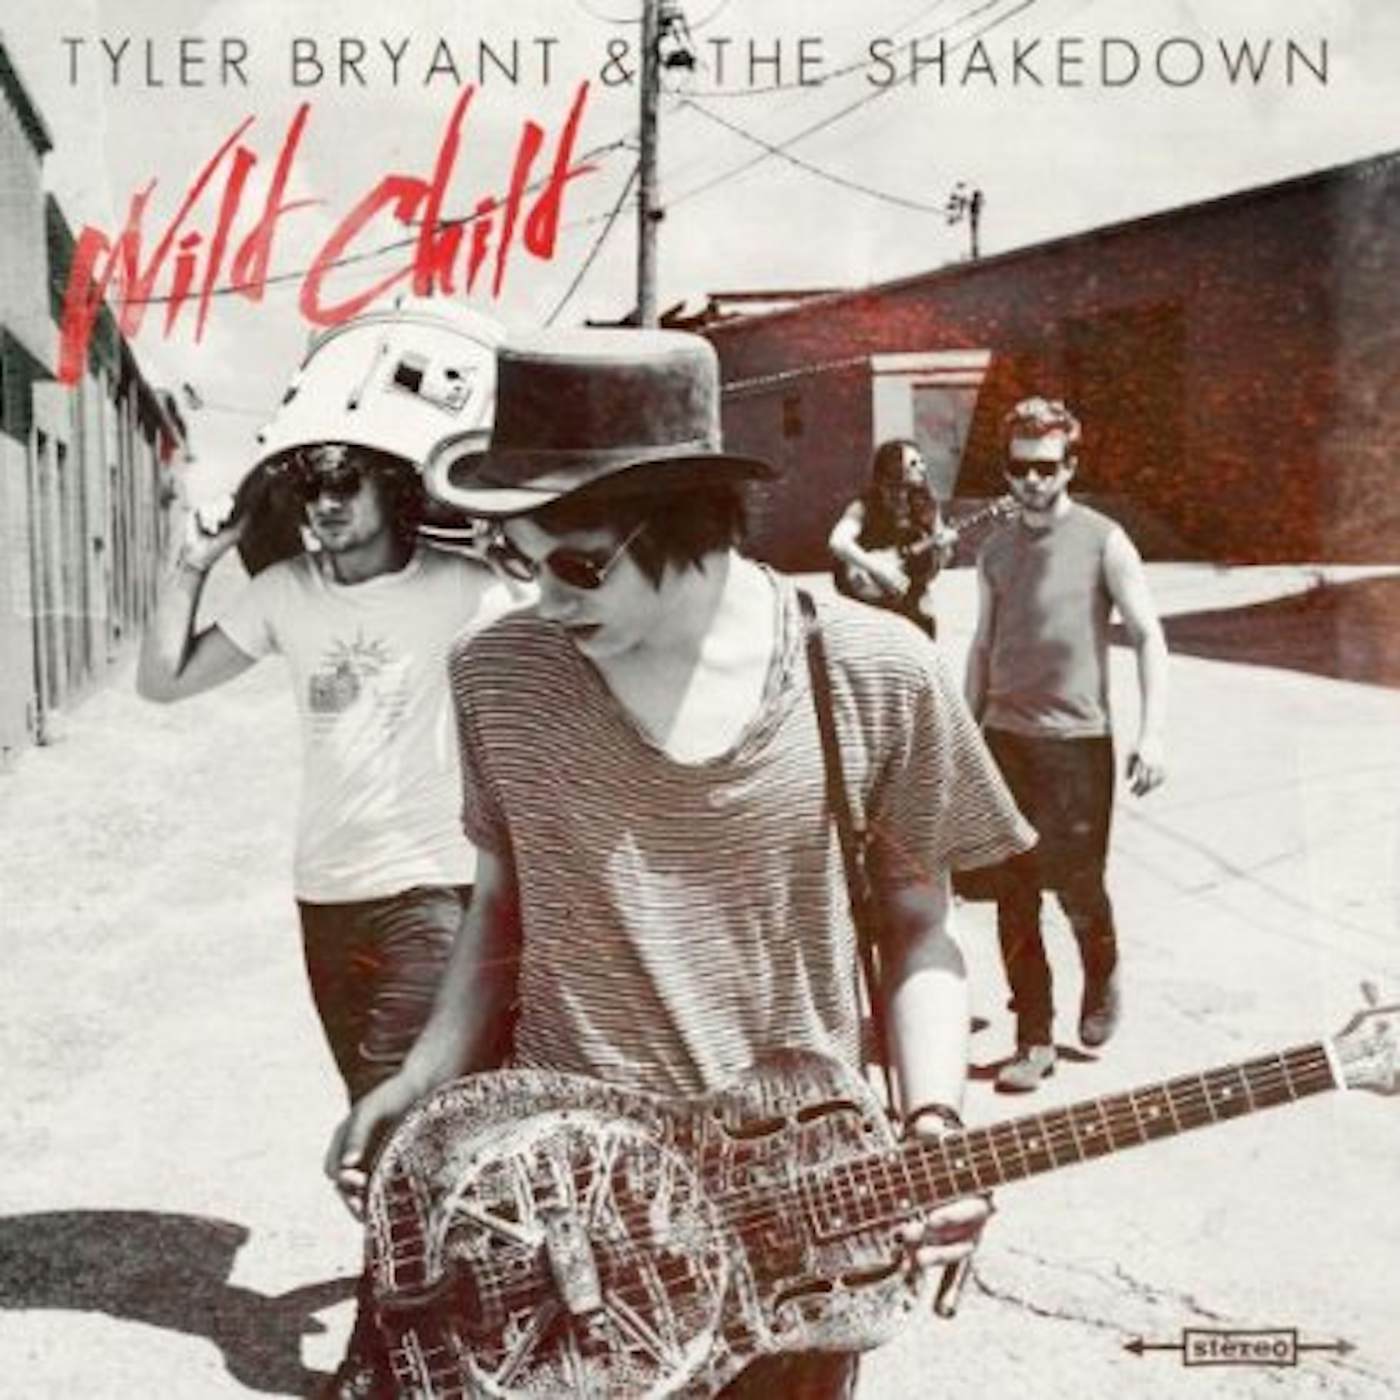 Tyler Bryant & the Shakedown Wild Child Vinyl Record